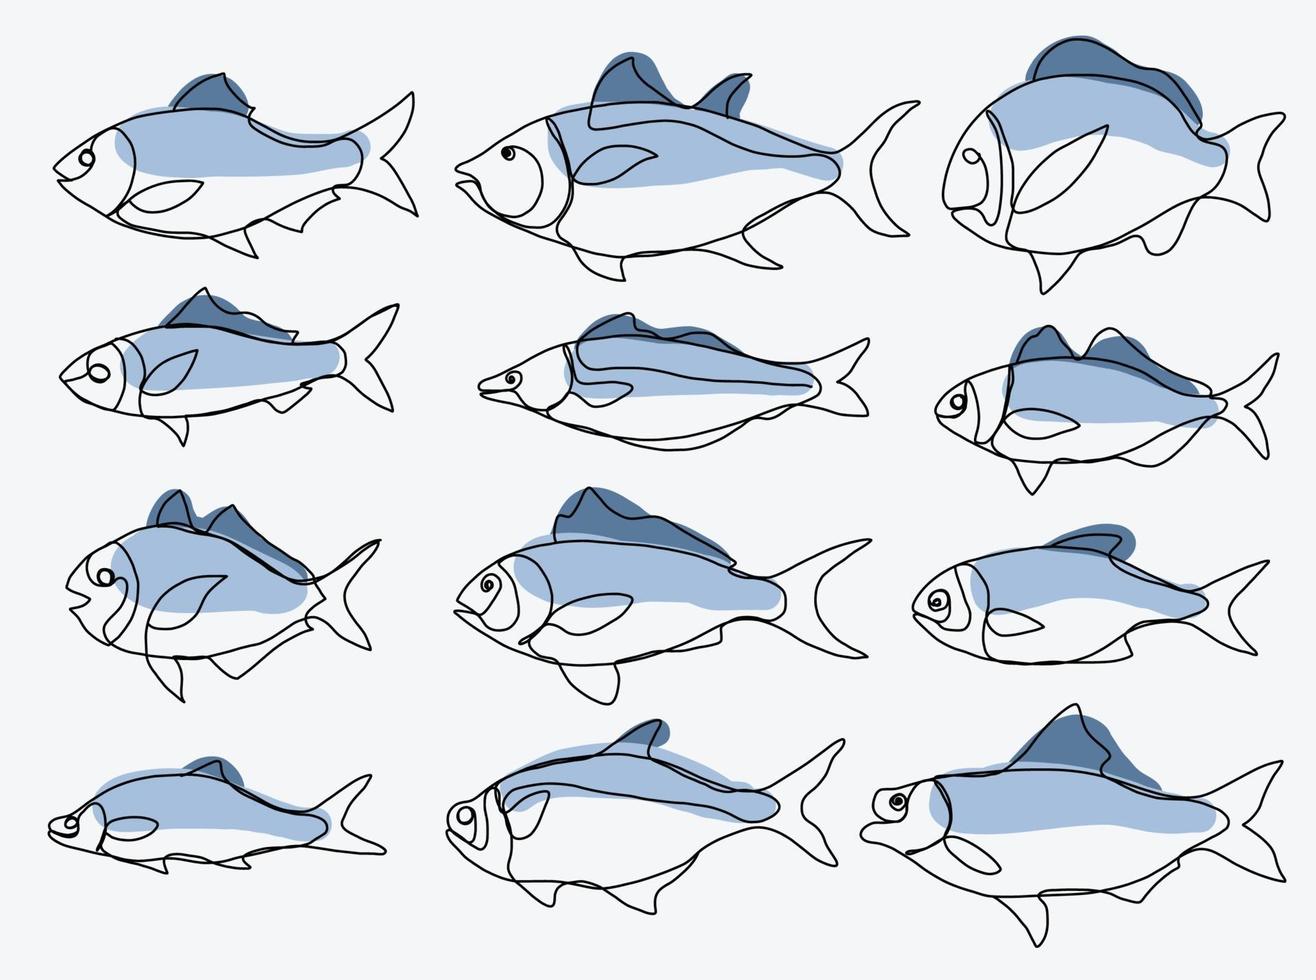 doodle frihand skiss kontinuerlig ritning av fisk samling. vektor